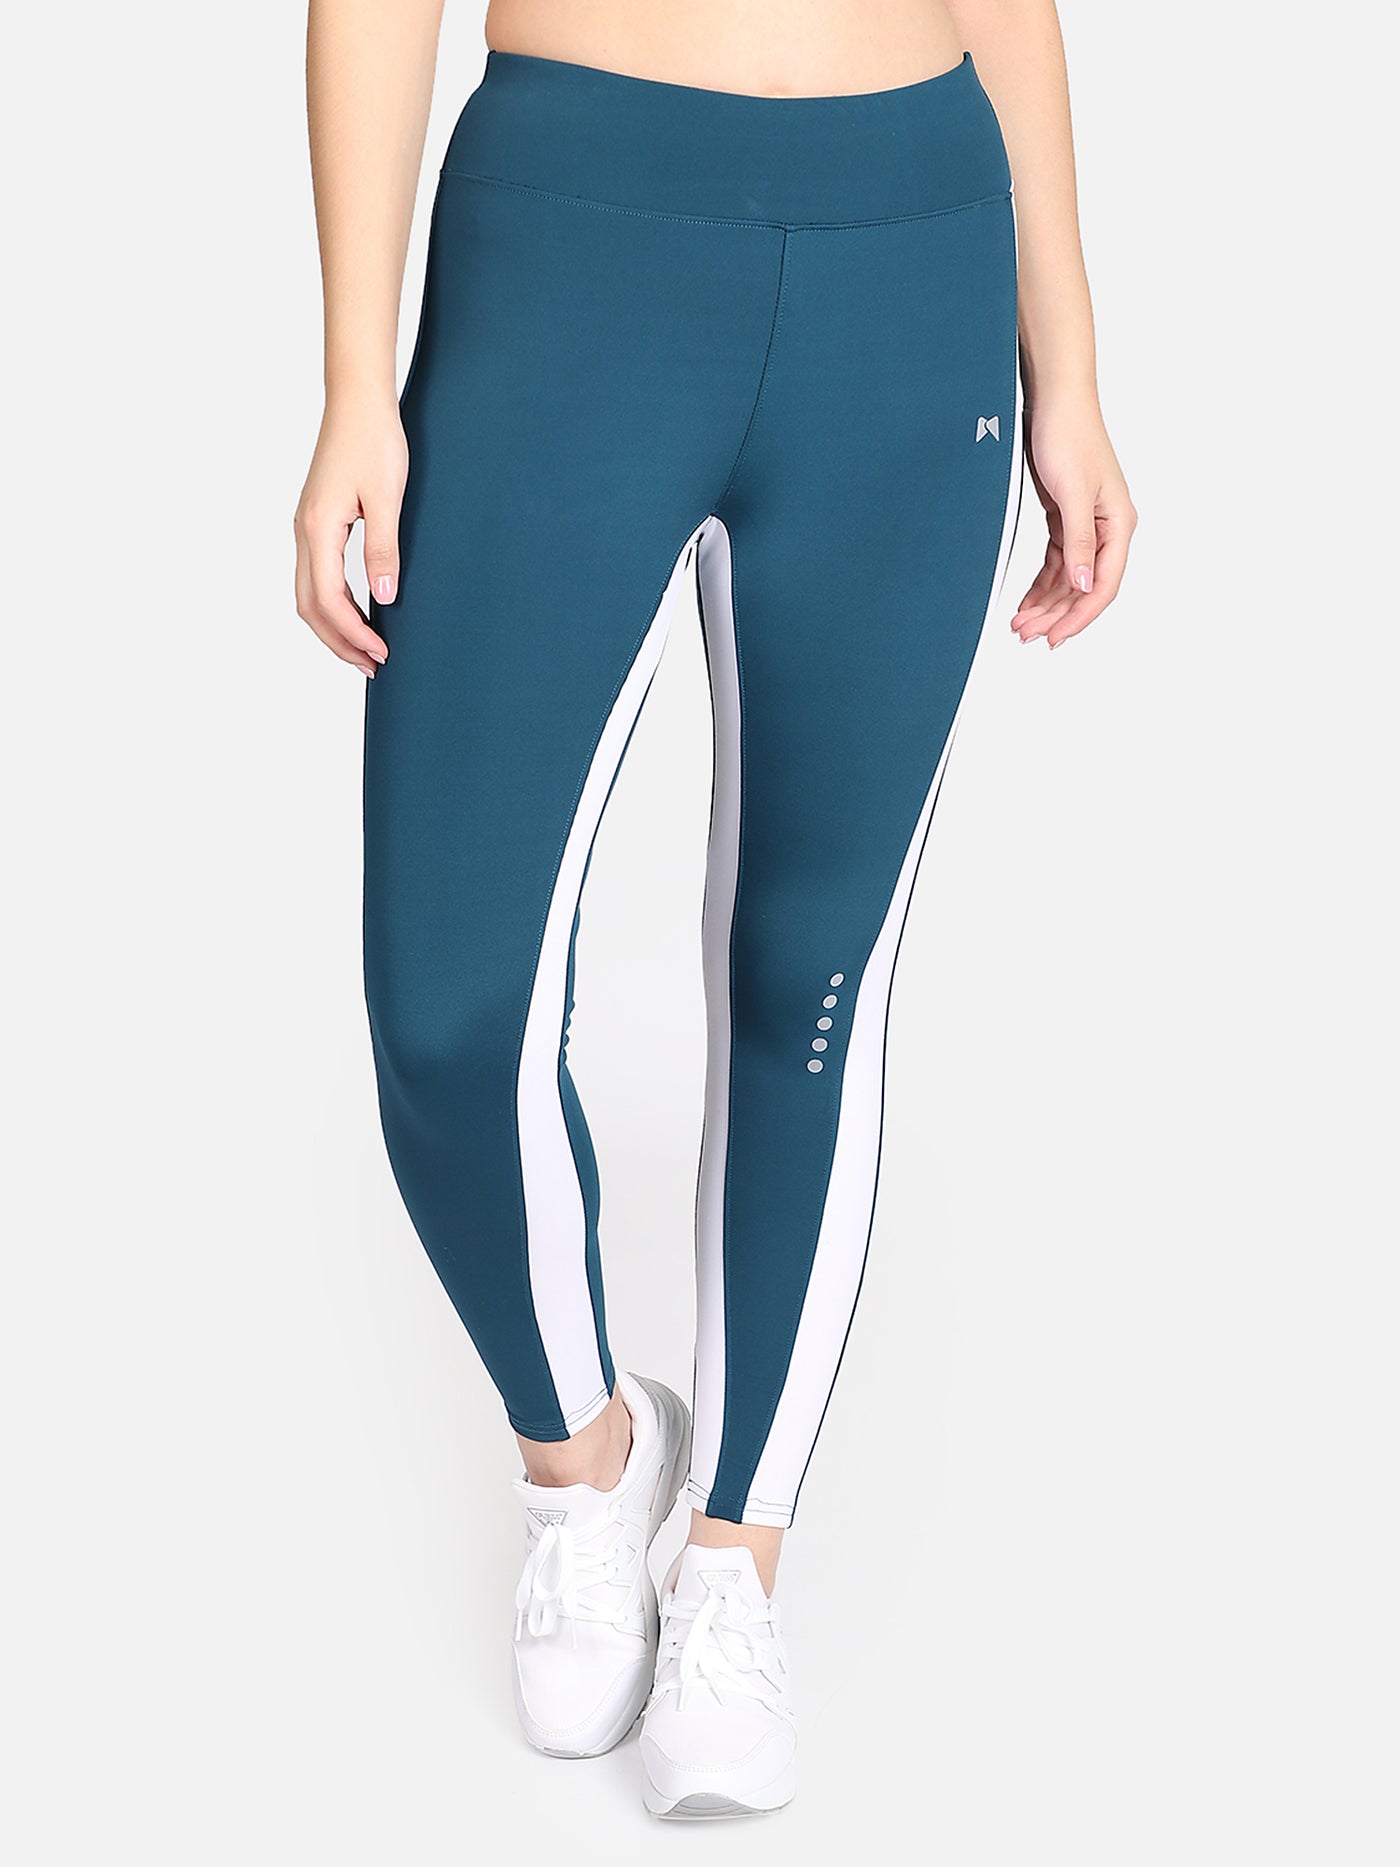 Pair of Medium Waist Side Strap Tight & Running Sports Bra – Teal Blue